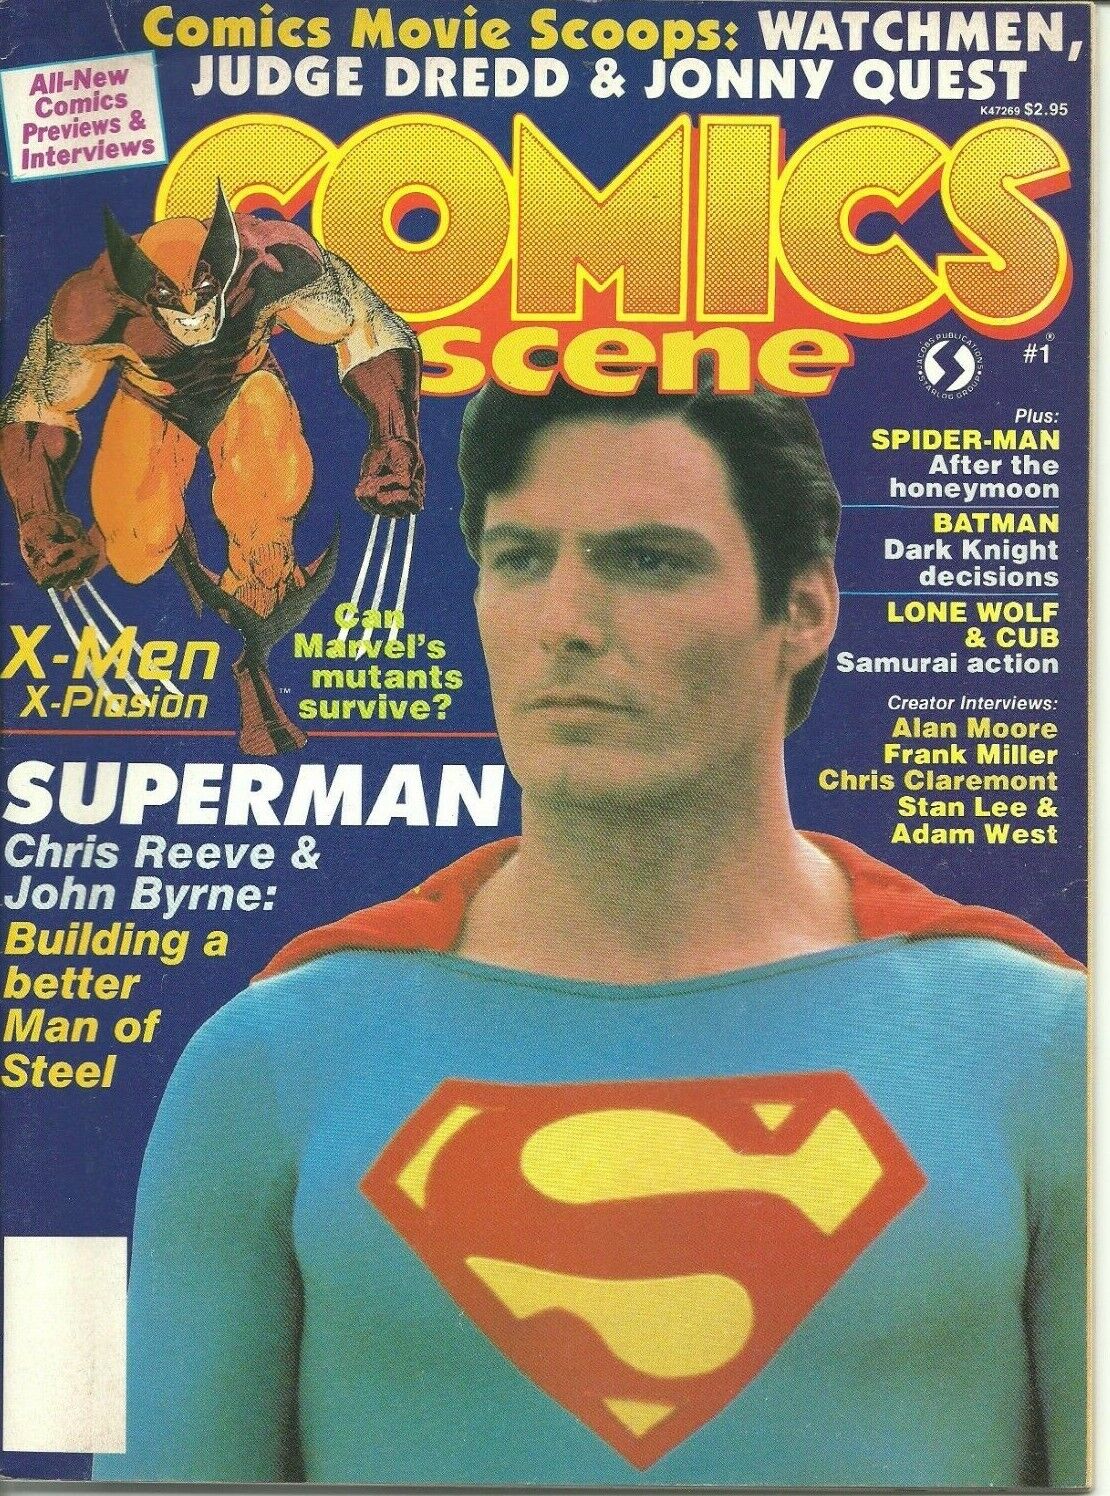 COMICS SCENE MAGAZINE #1 Vol 2 SUPERMAN 1987 CHRISTOPHER REEVES